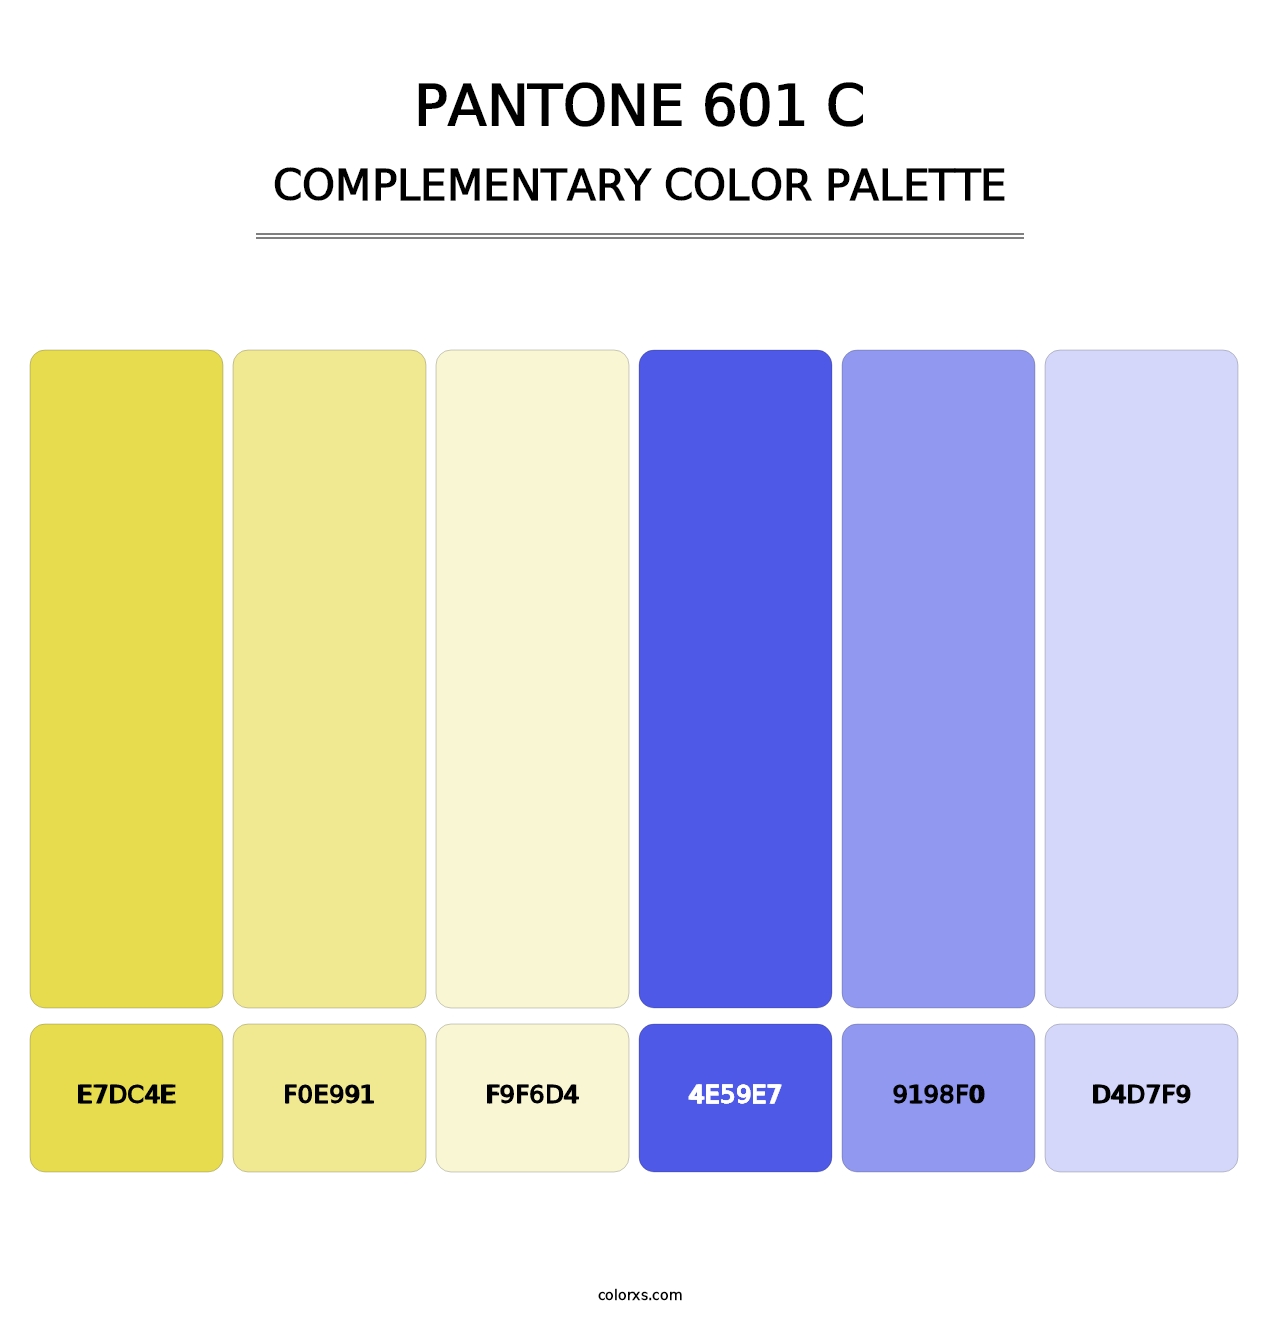 PANTONE 601 C - Complementary Color Palette